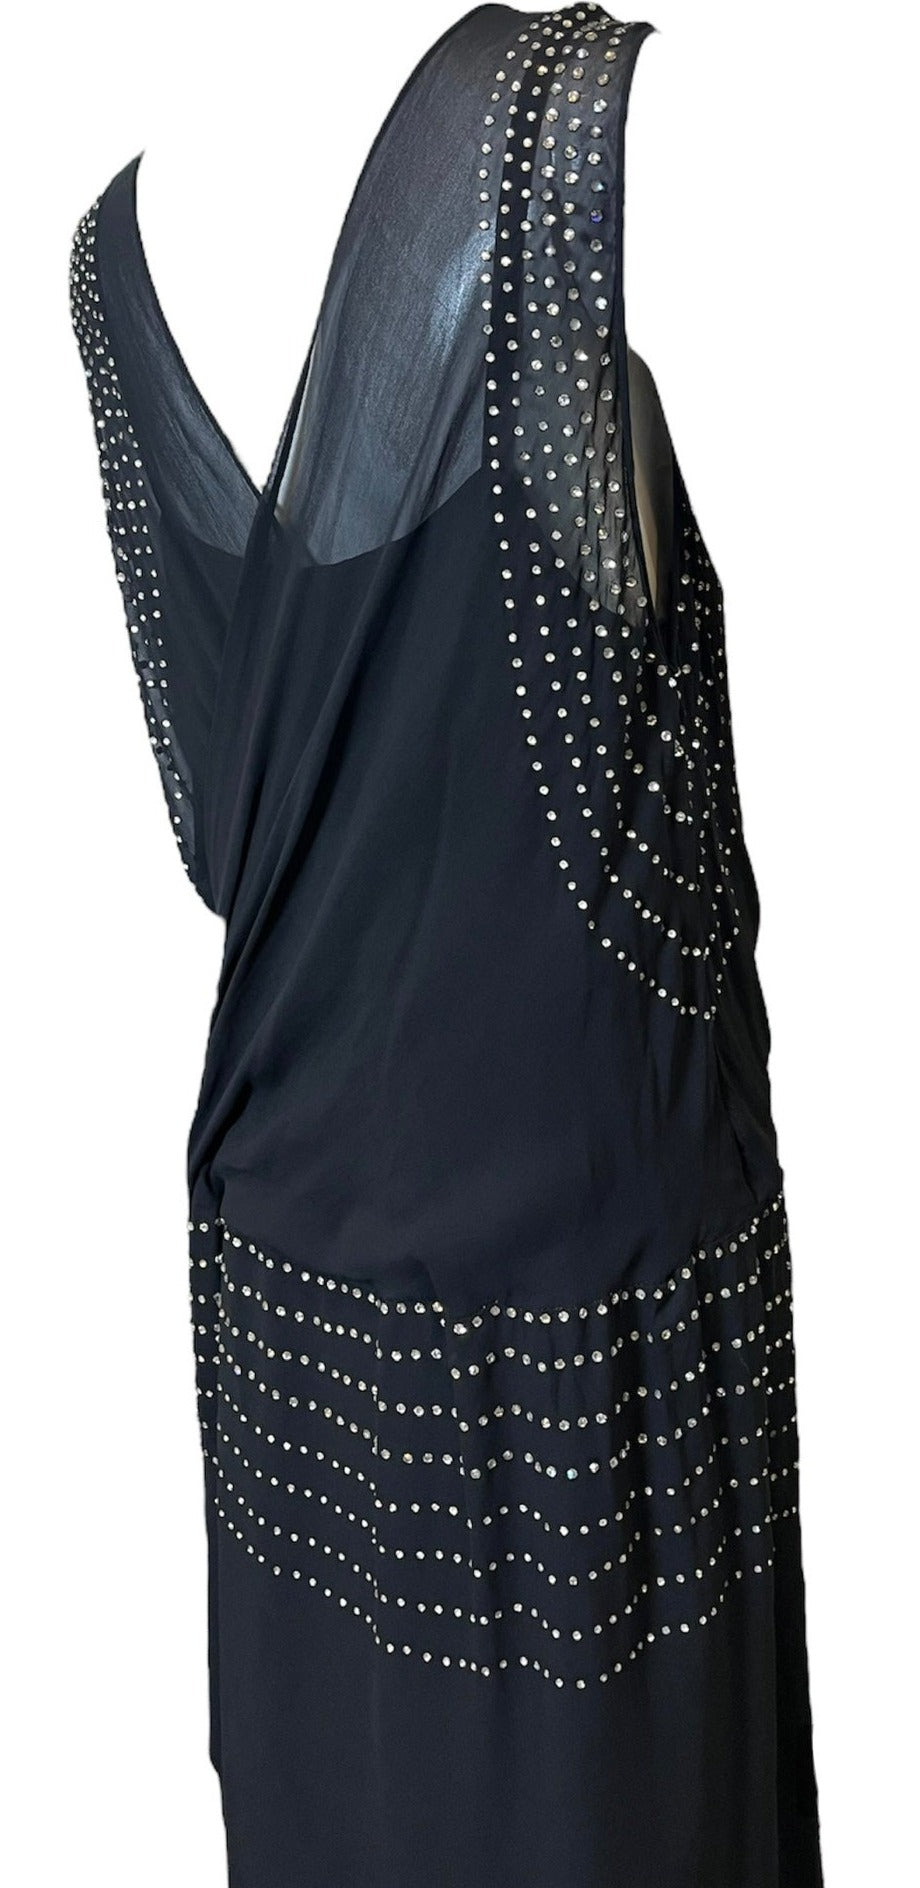 1920s Black Chiffon Flapper Dress Studded with Rhinestones DETAIL 4 of 6